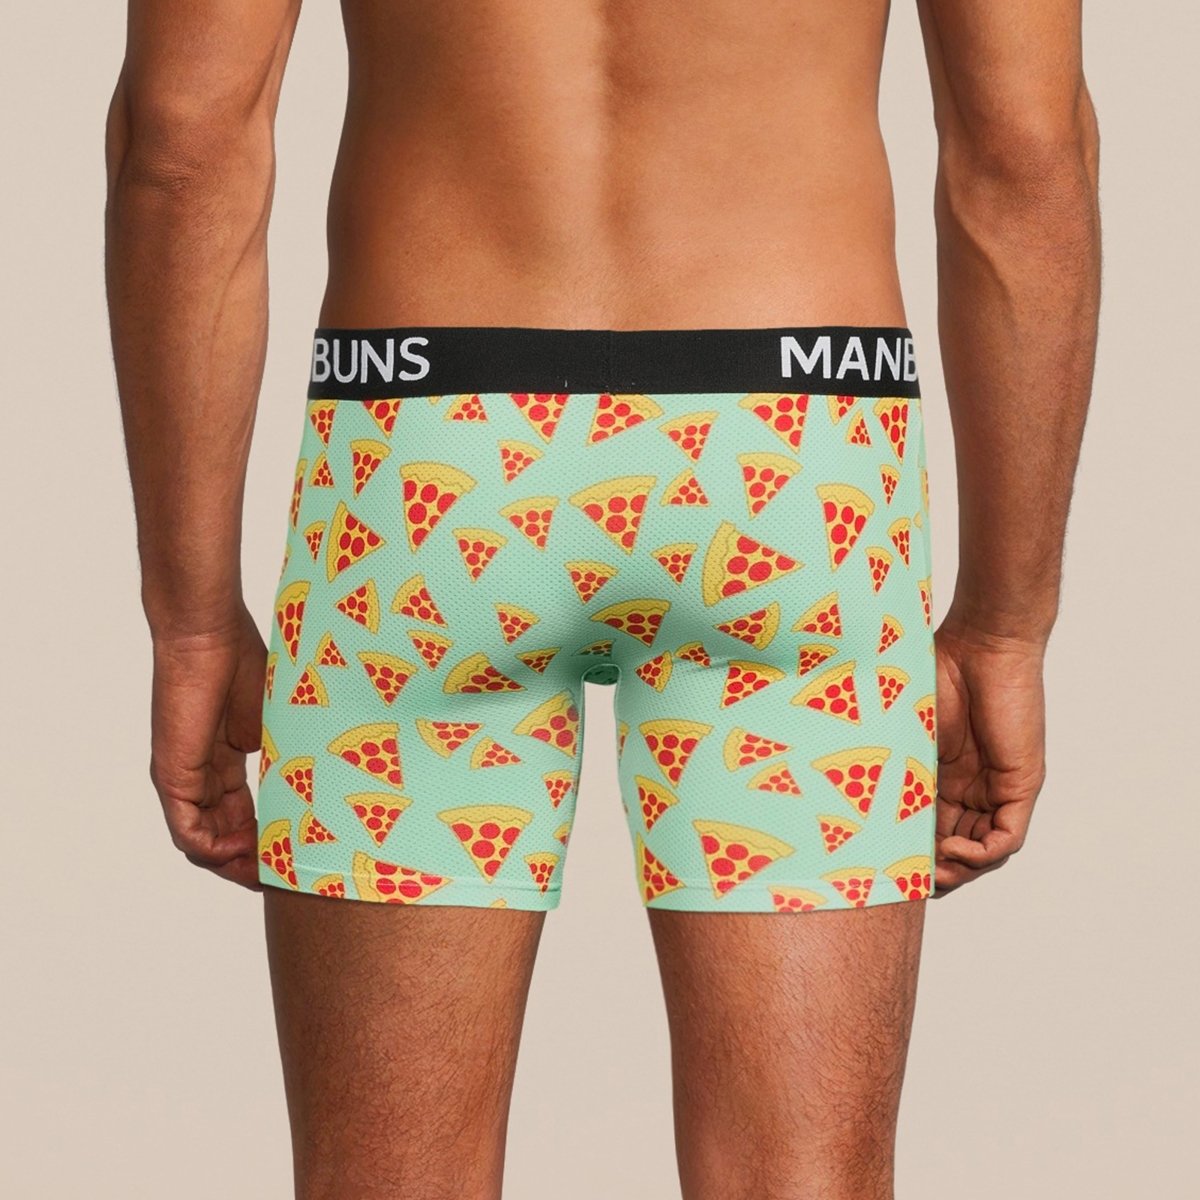 Men's Pizza Boxer Brief Underwear and Sock Set - MANBUNS Underwear & Socks Free Shipping